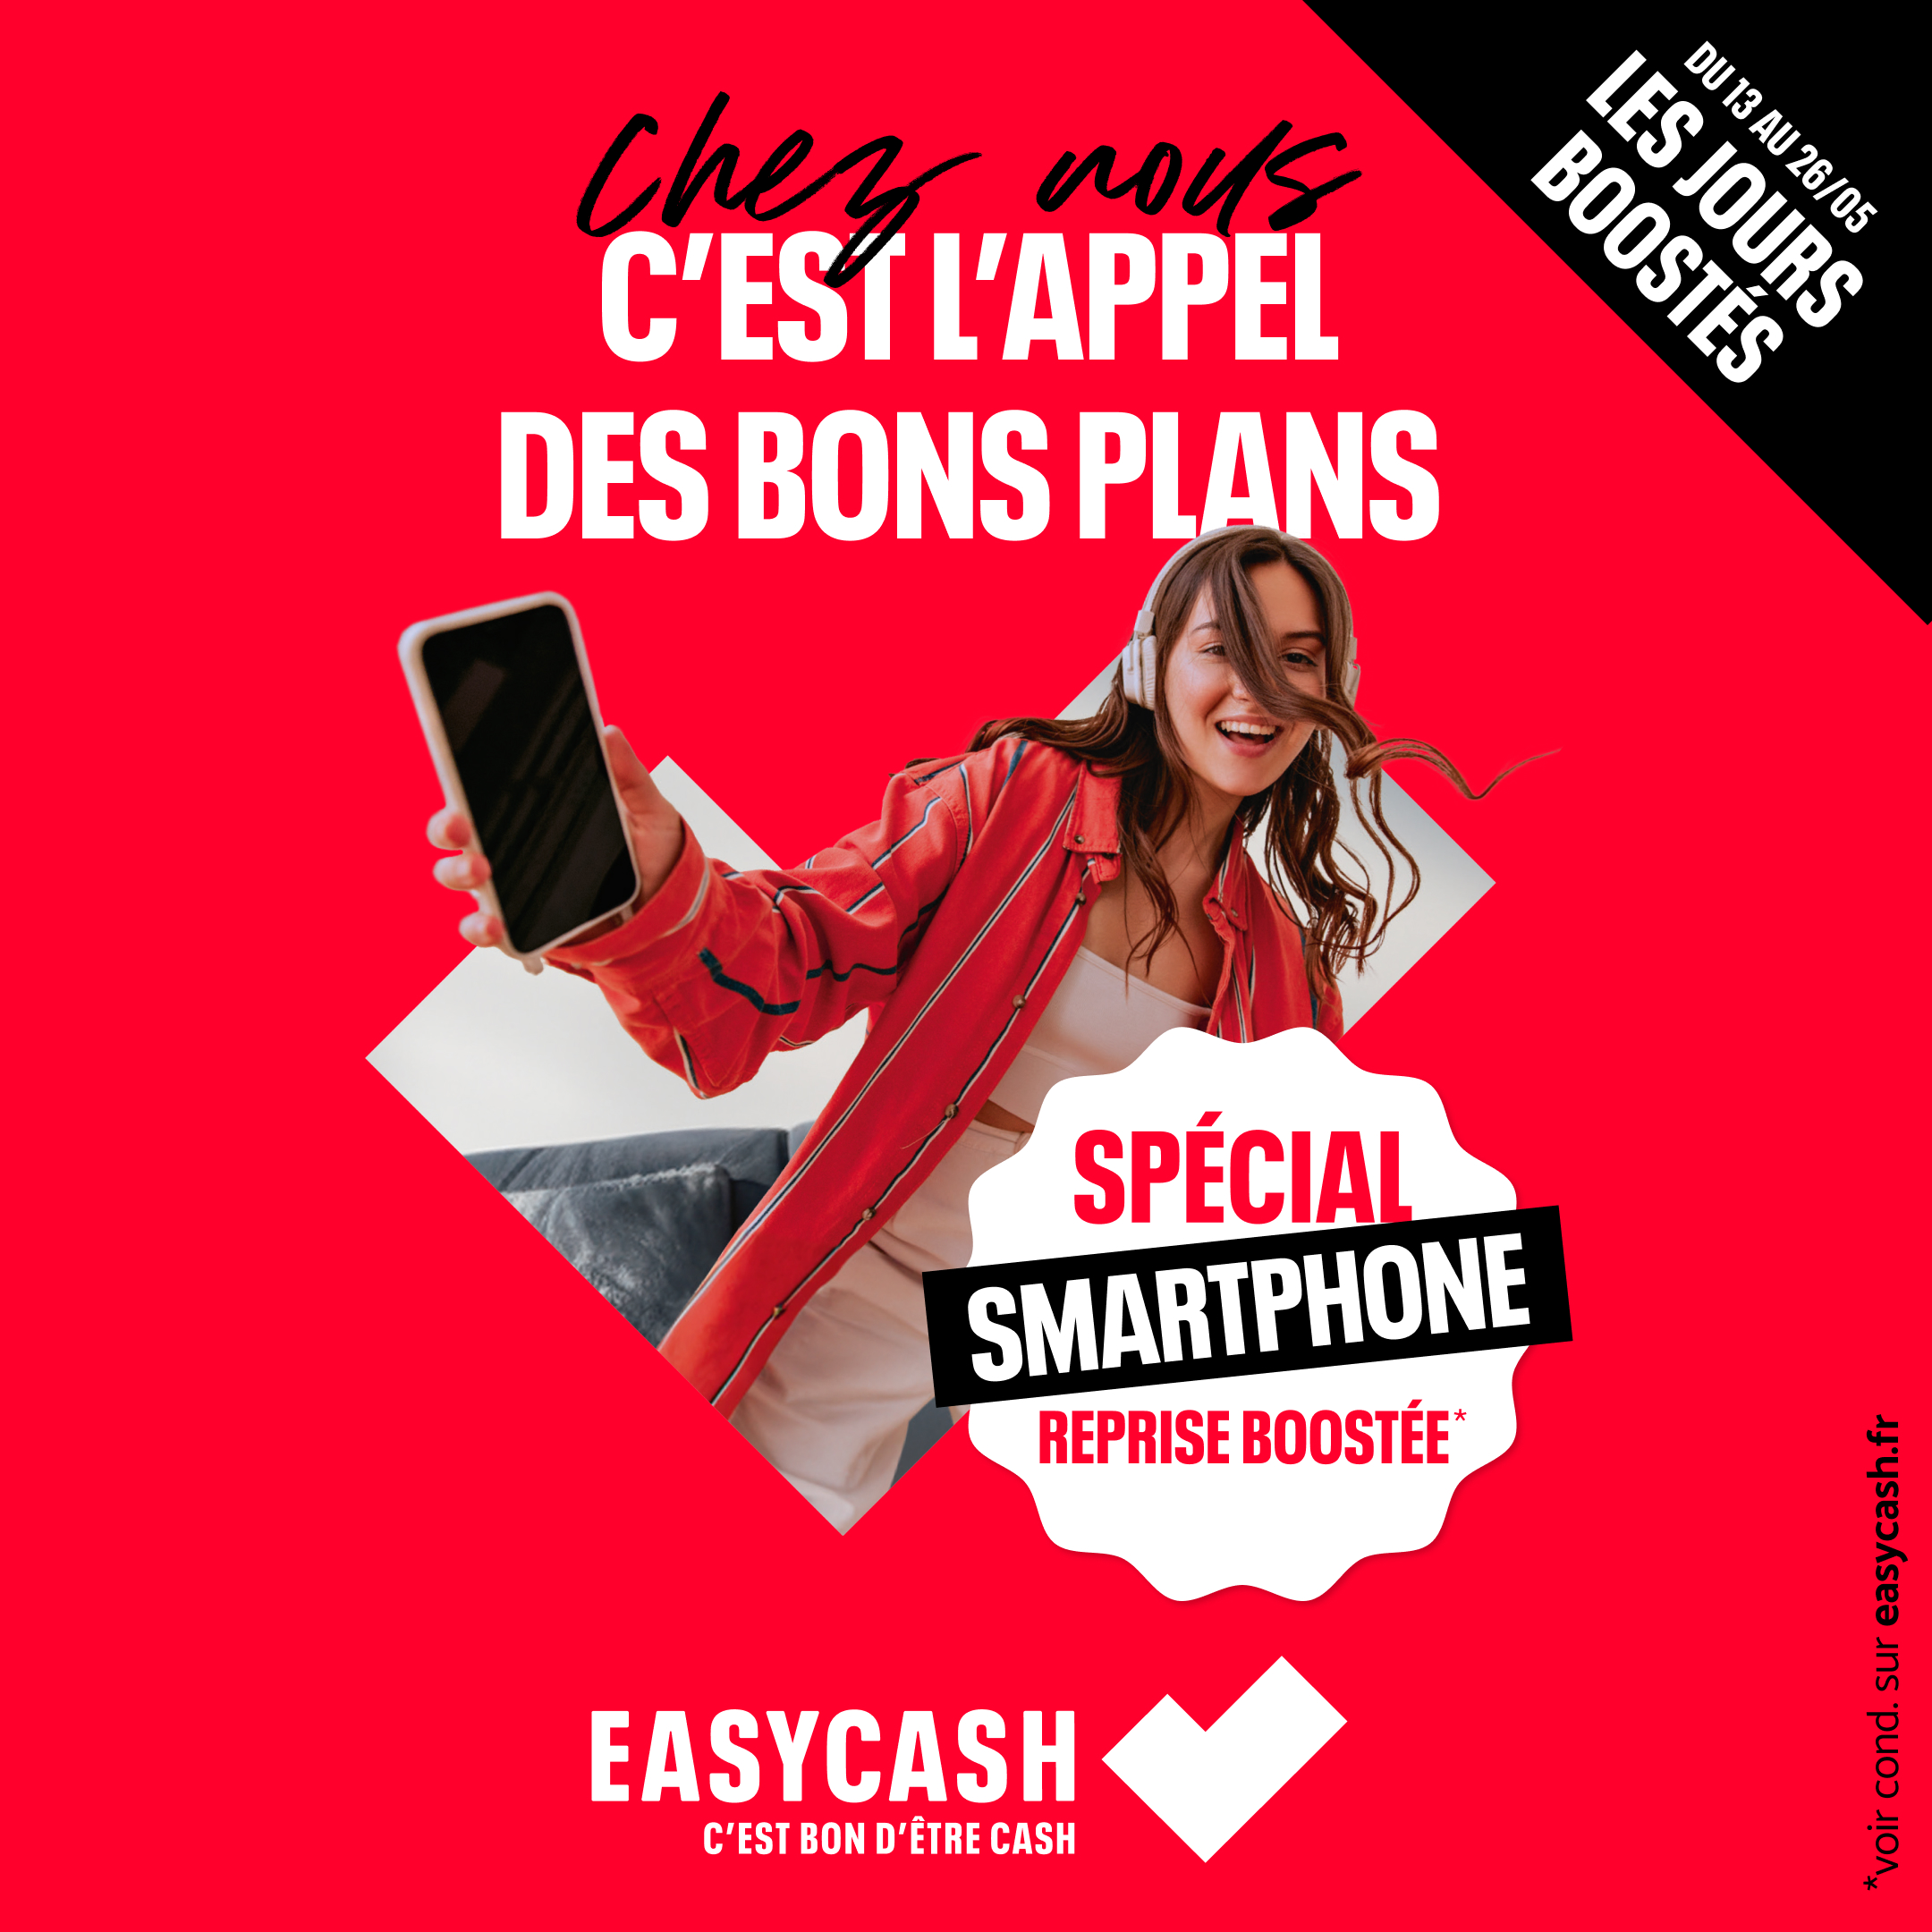 Be Green - Saint Parres - Les jours boostés chez Easy Cash ! - ec post insta 1 - 1